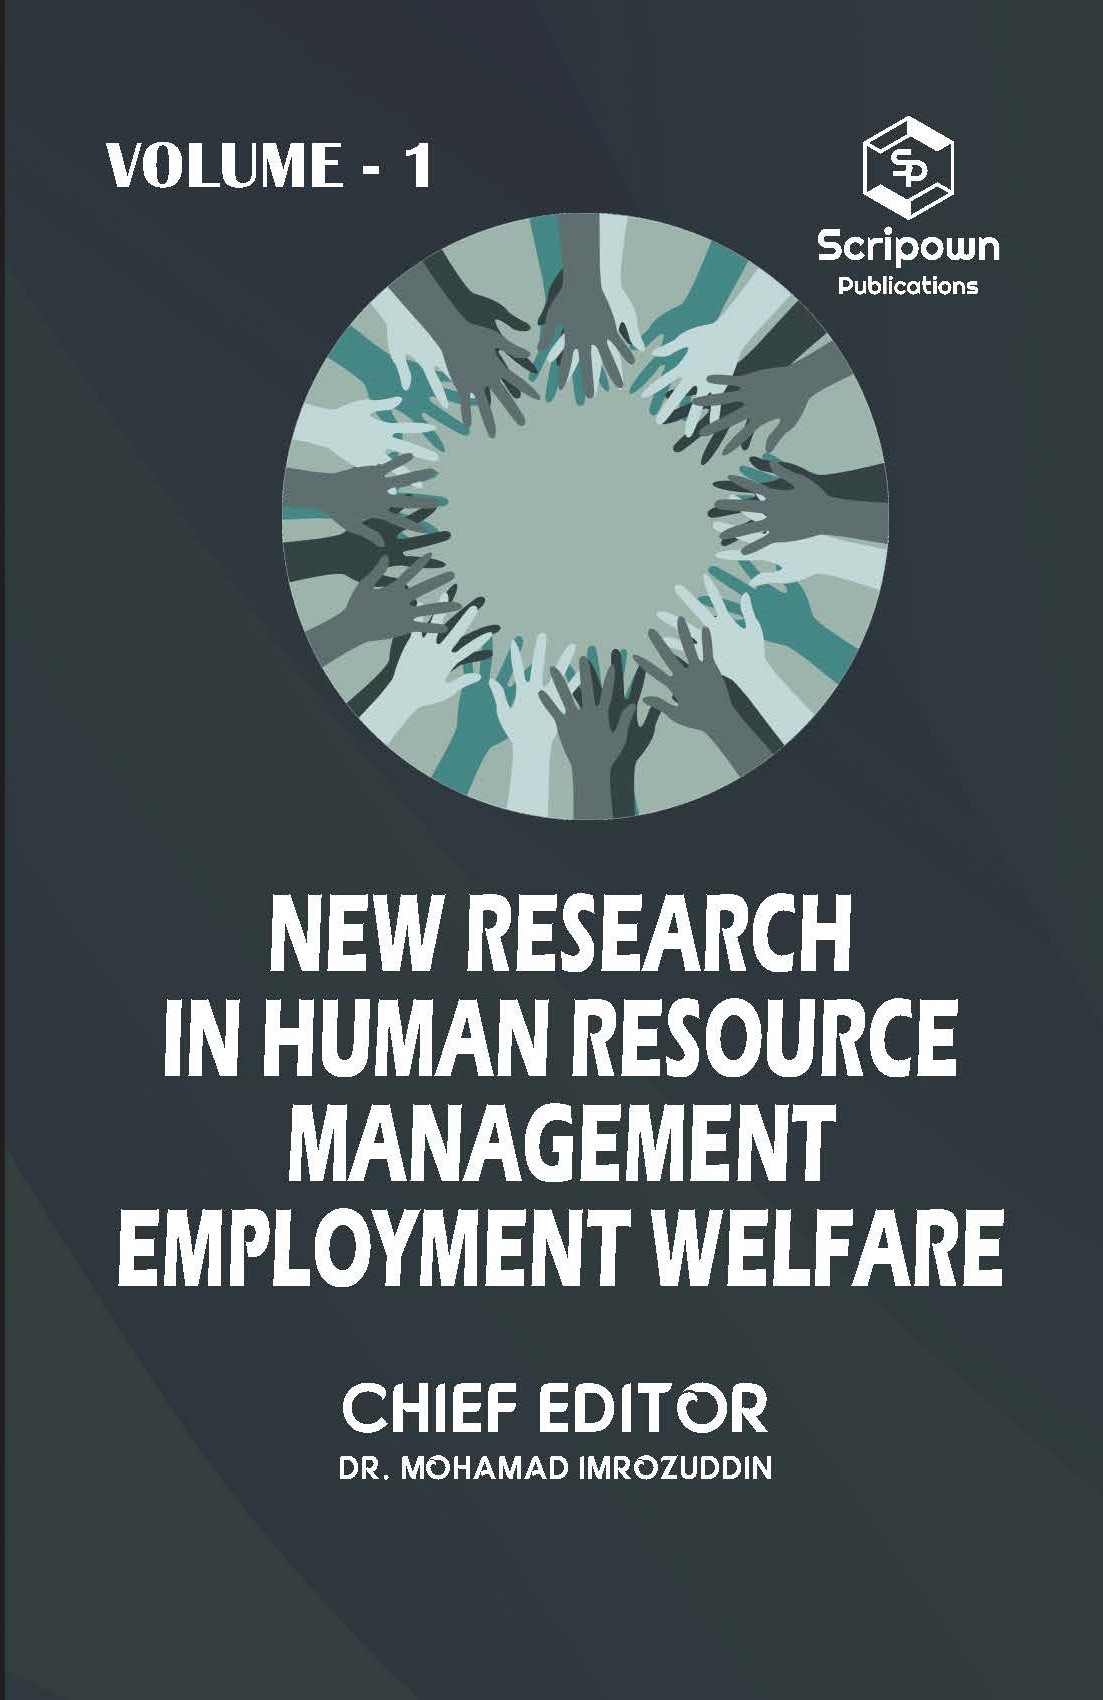 New Research in Human Resource Management & Employment Welfare (Volume - 1)